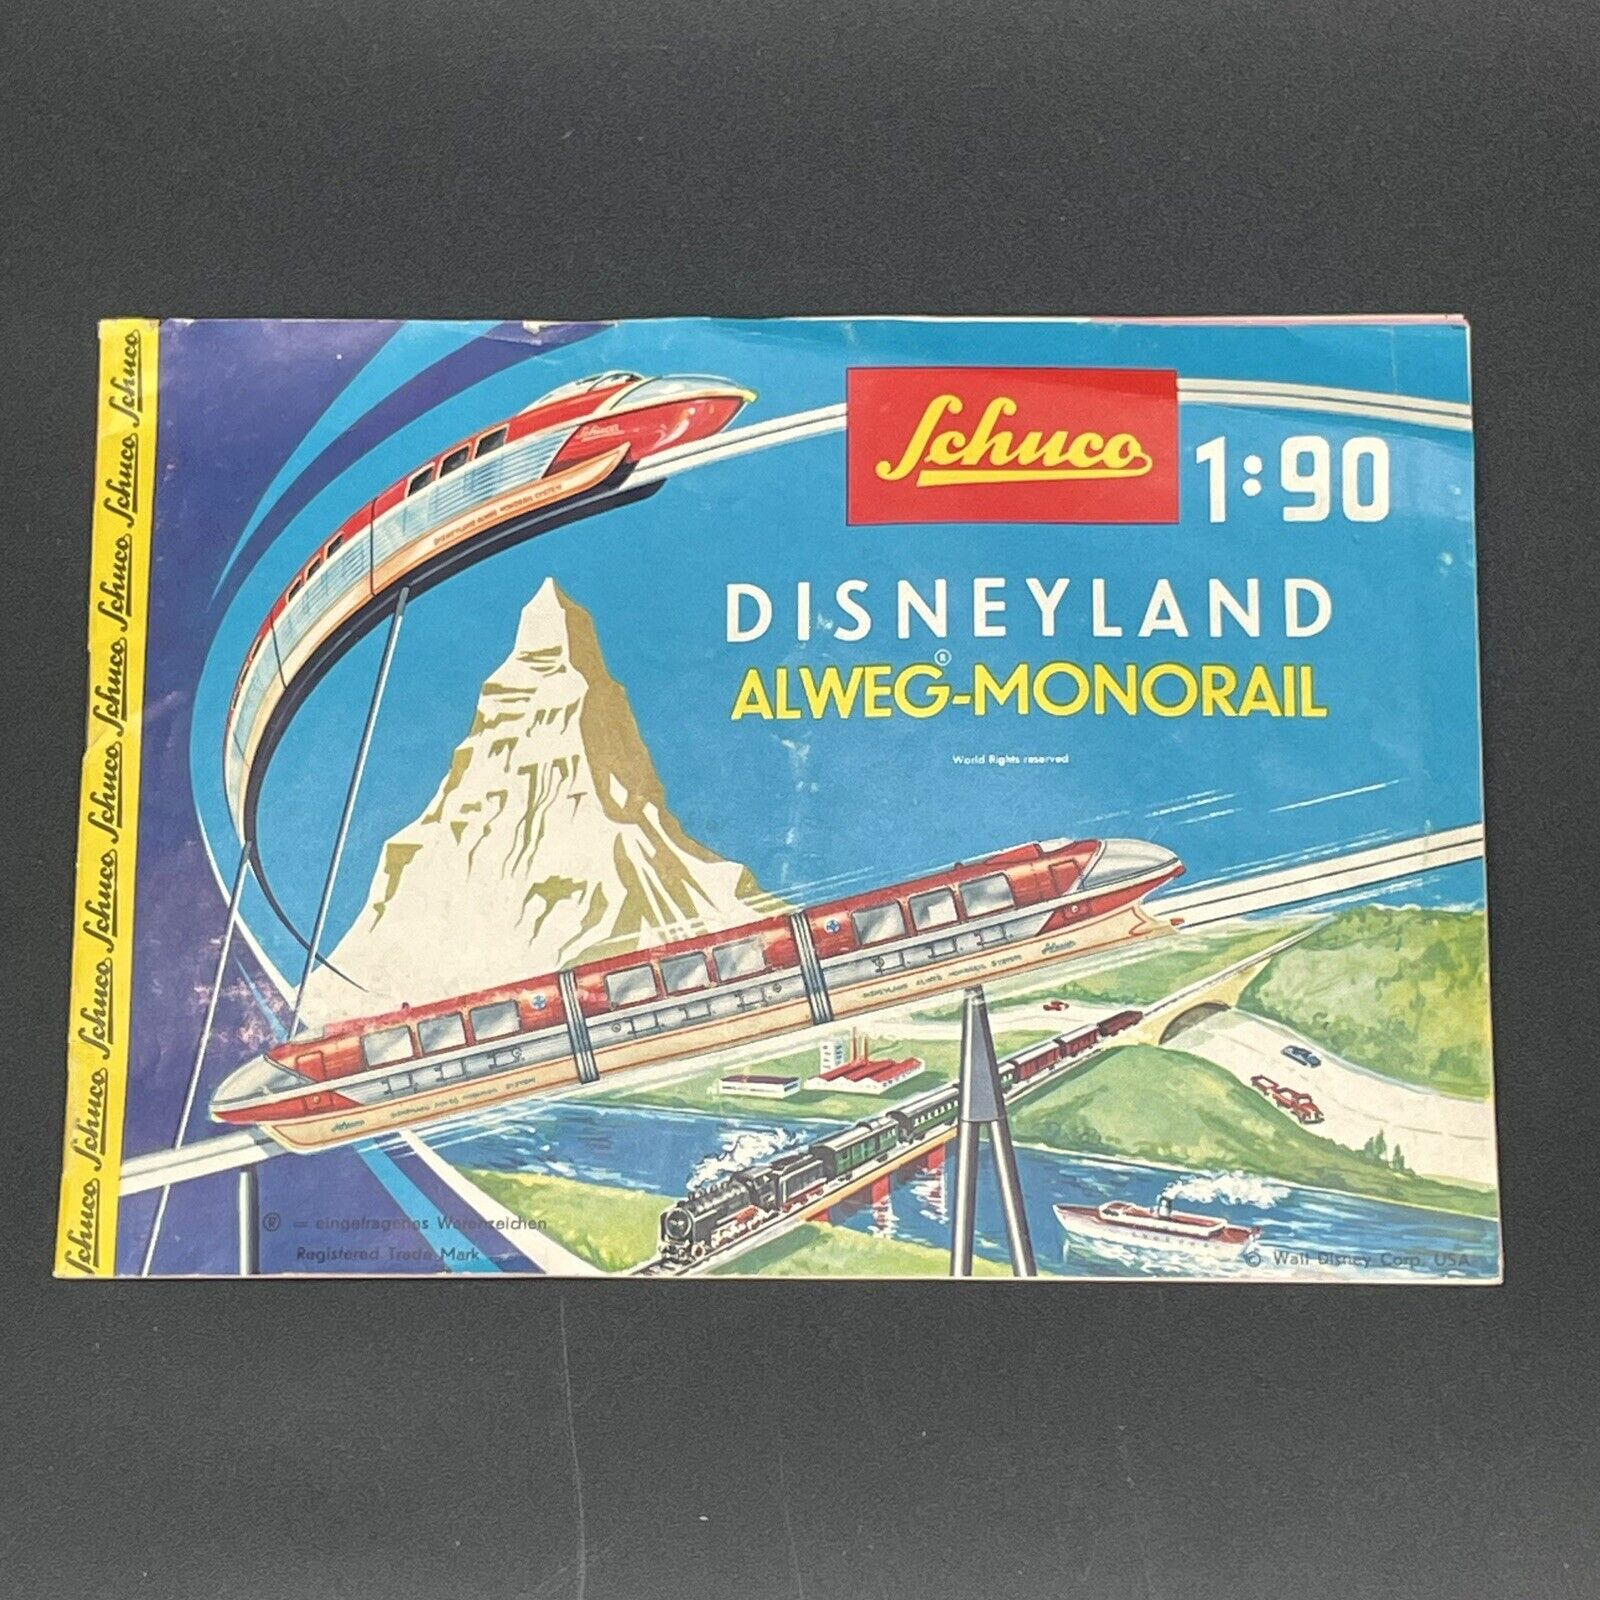 Schuco Disneyland Alweg-Monorail Manual 1:90 Original 1961 German